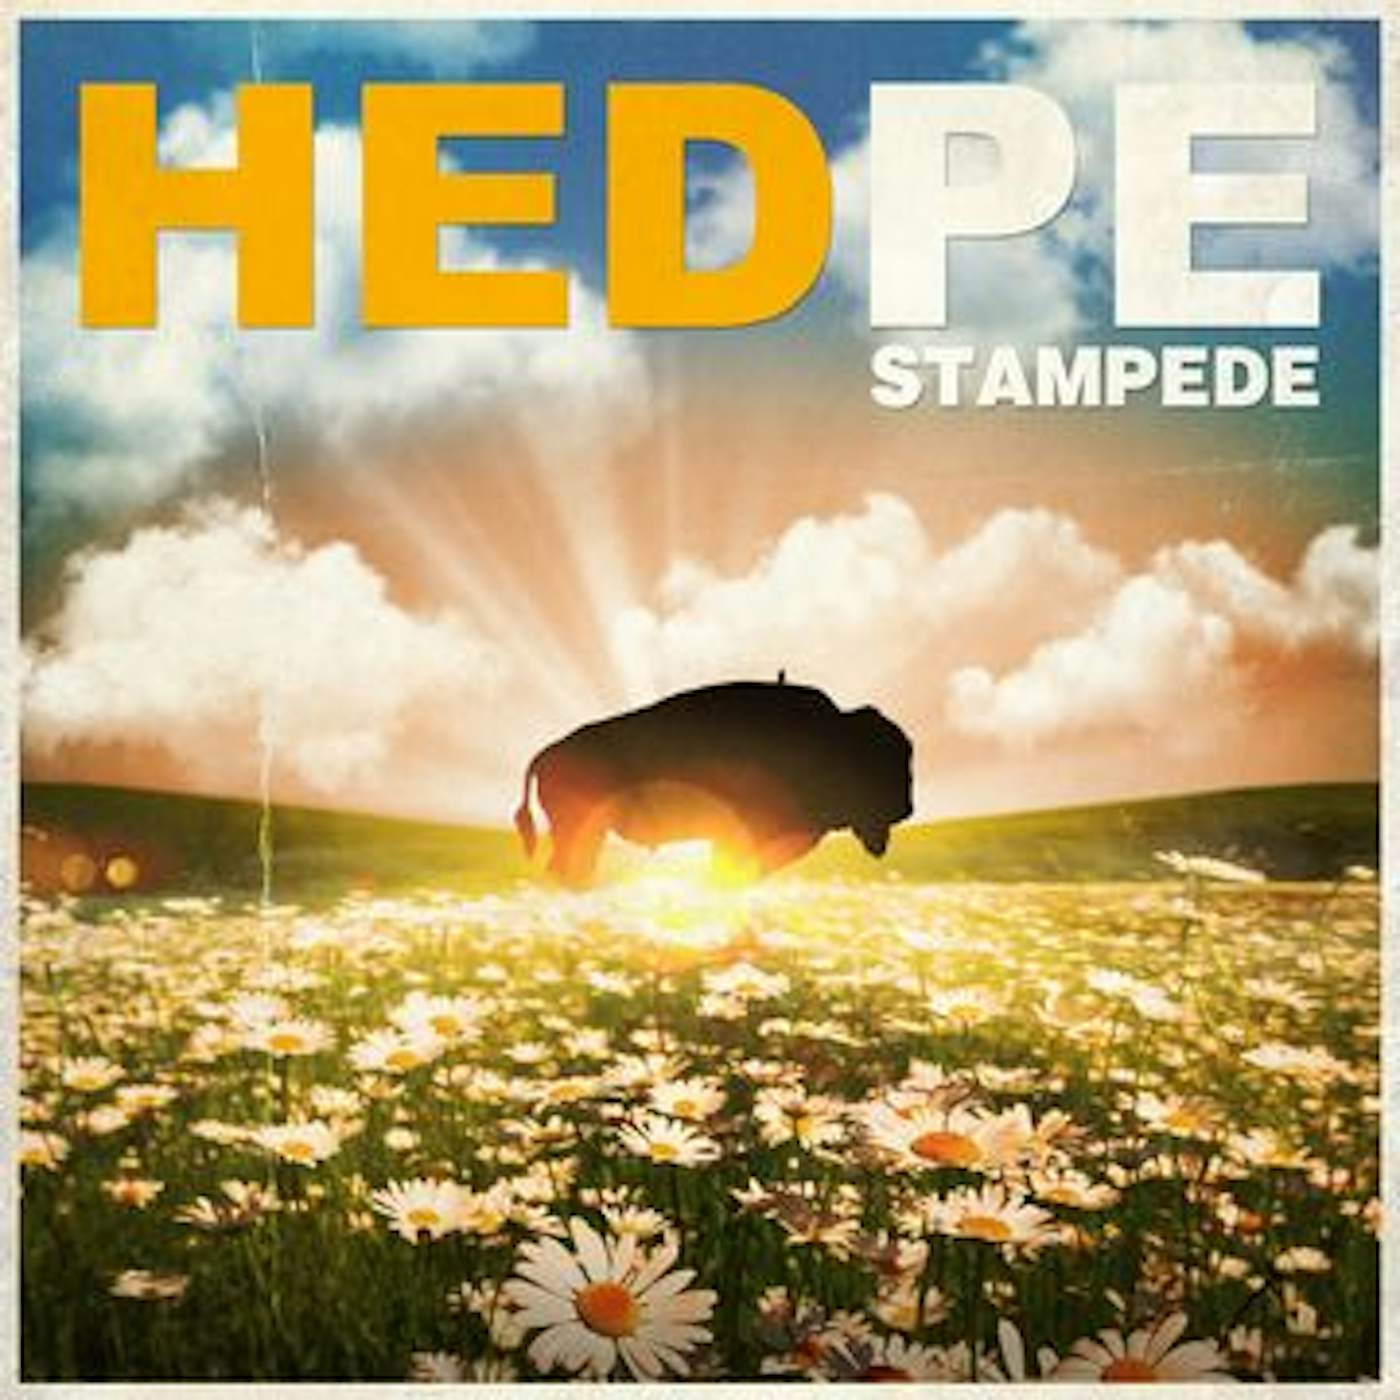 P.E. STAMPEDE CD